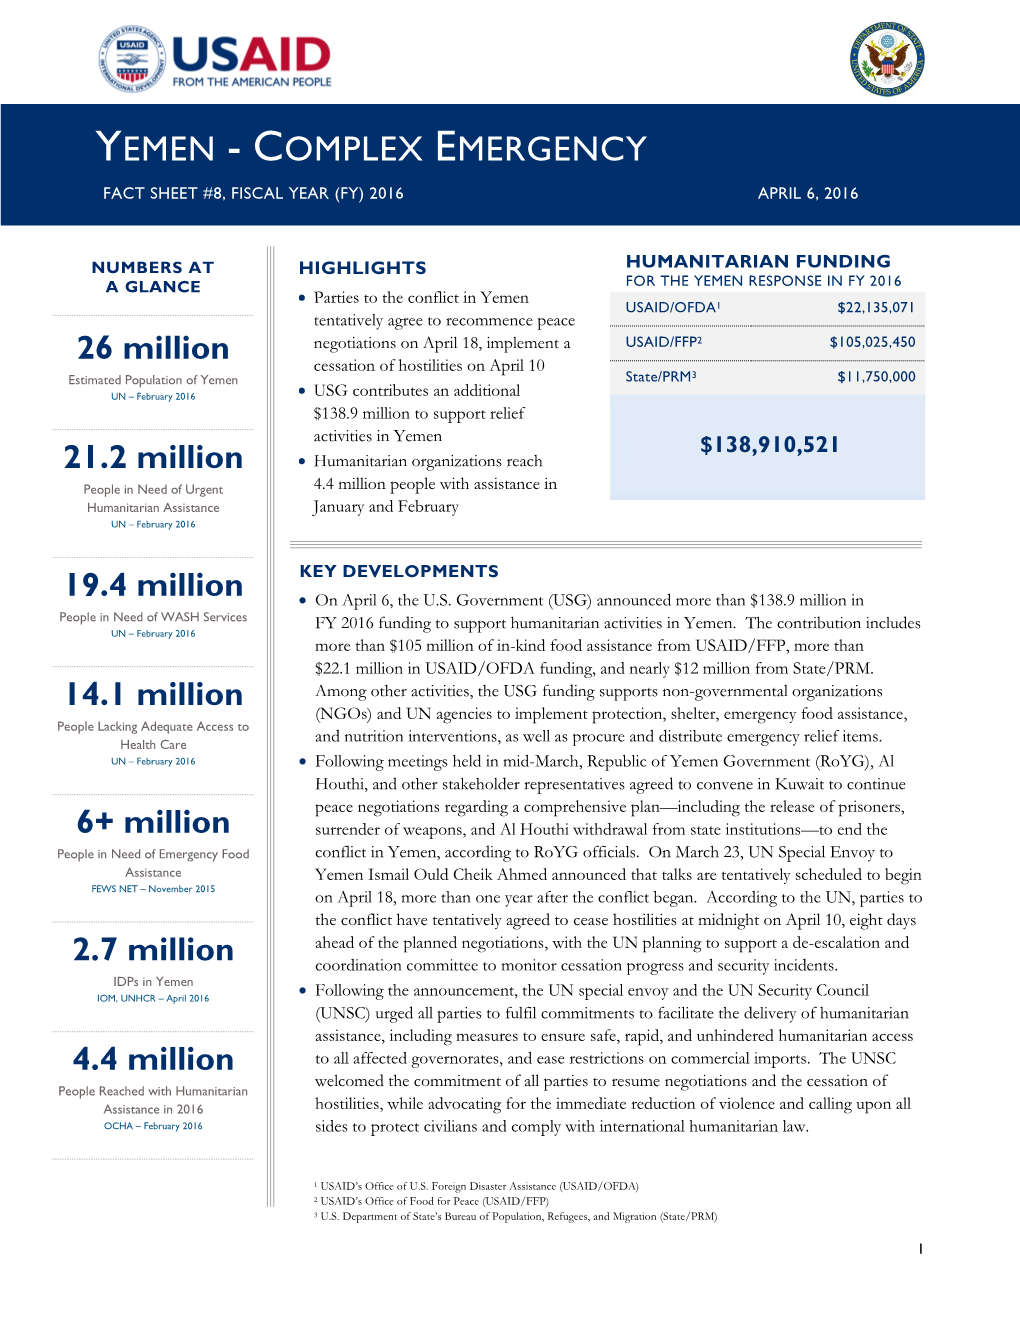 Yemen Complex Emergency Fact Sheet #8